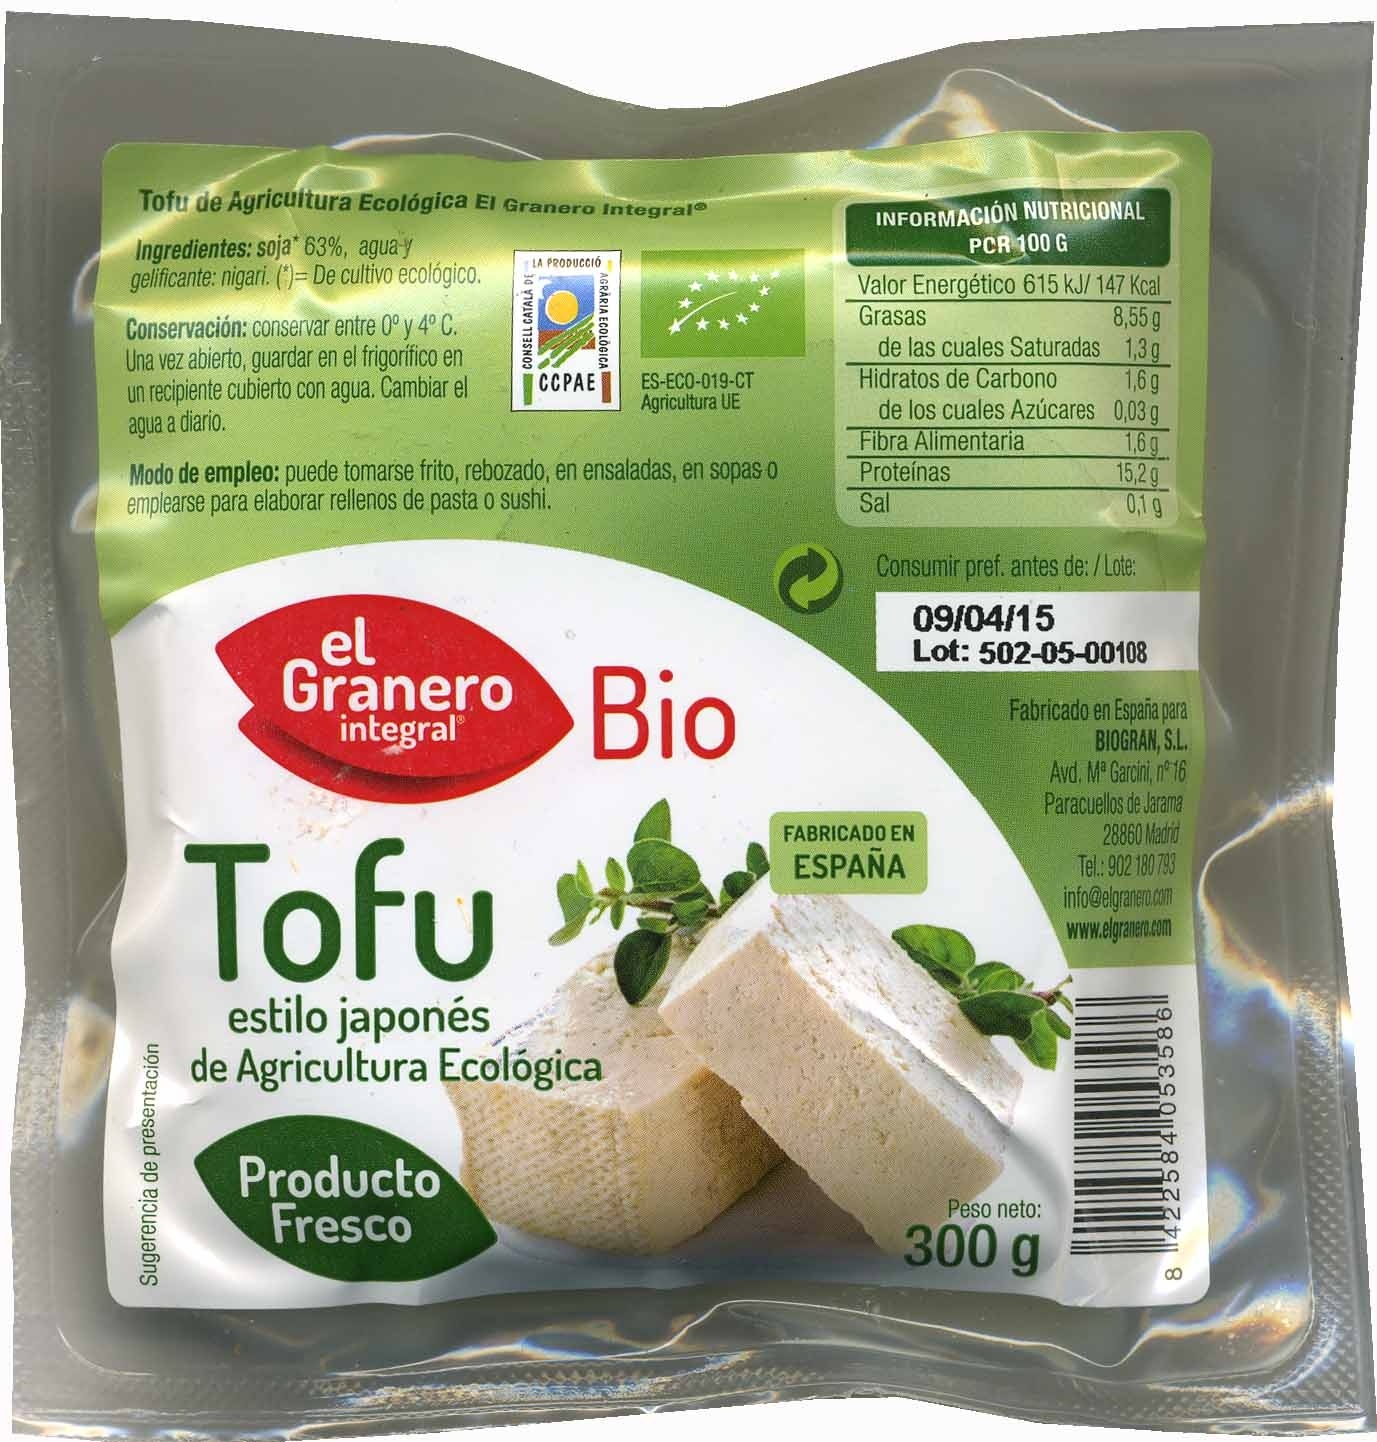 Tofu estilo japonés de agricultura ecológica - Product - es